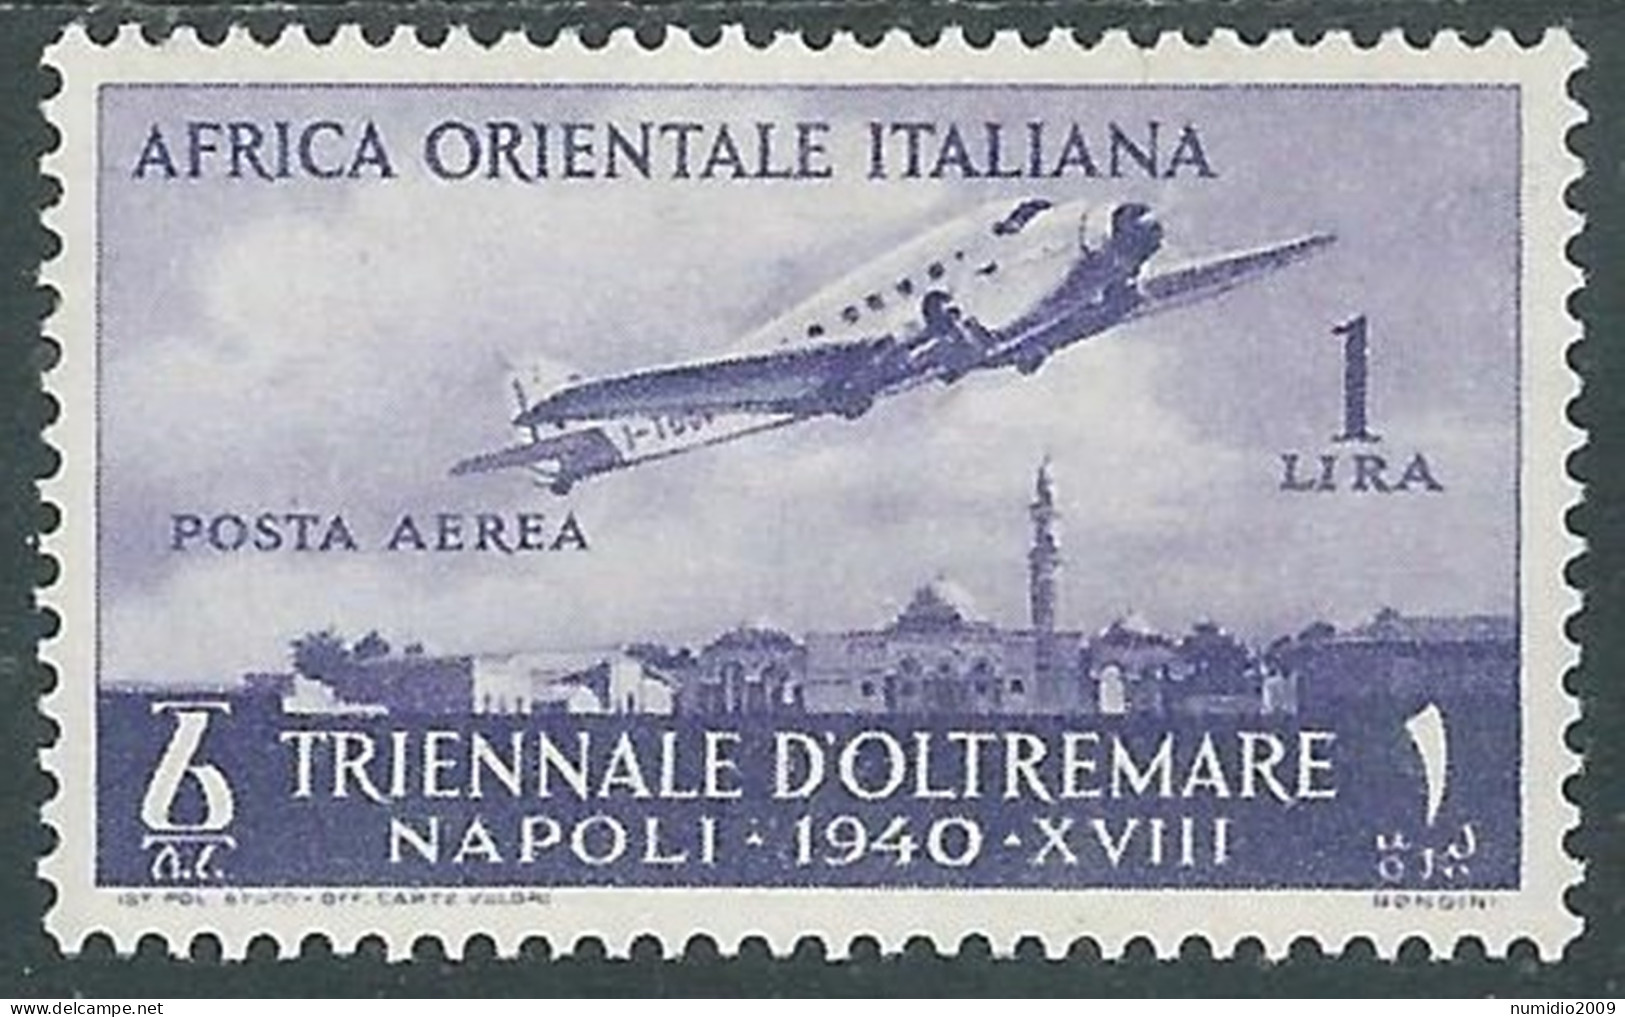 1940 AFRICA ORIENTALE ITALIANA POSTA AEREA TRIENNALE OLTREMARE 1 LIRA MH * I43 - Africa Oriental Italiana